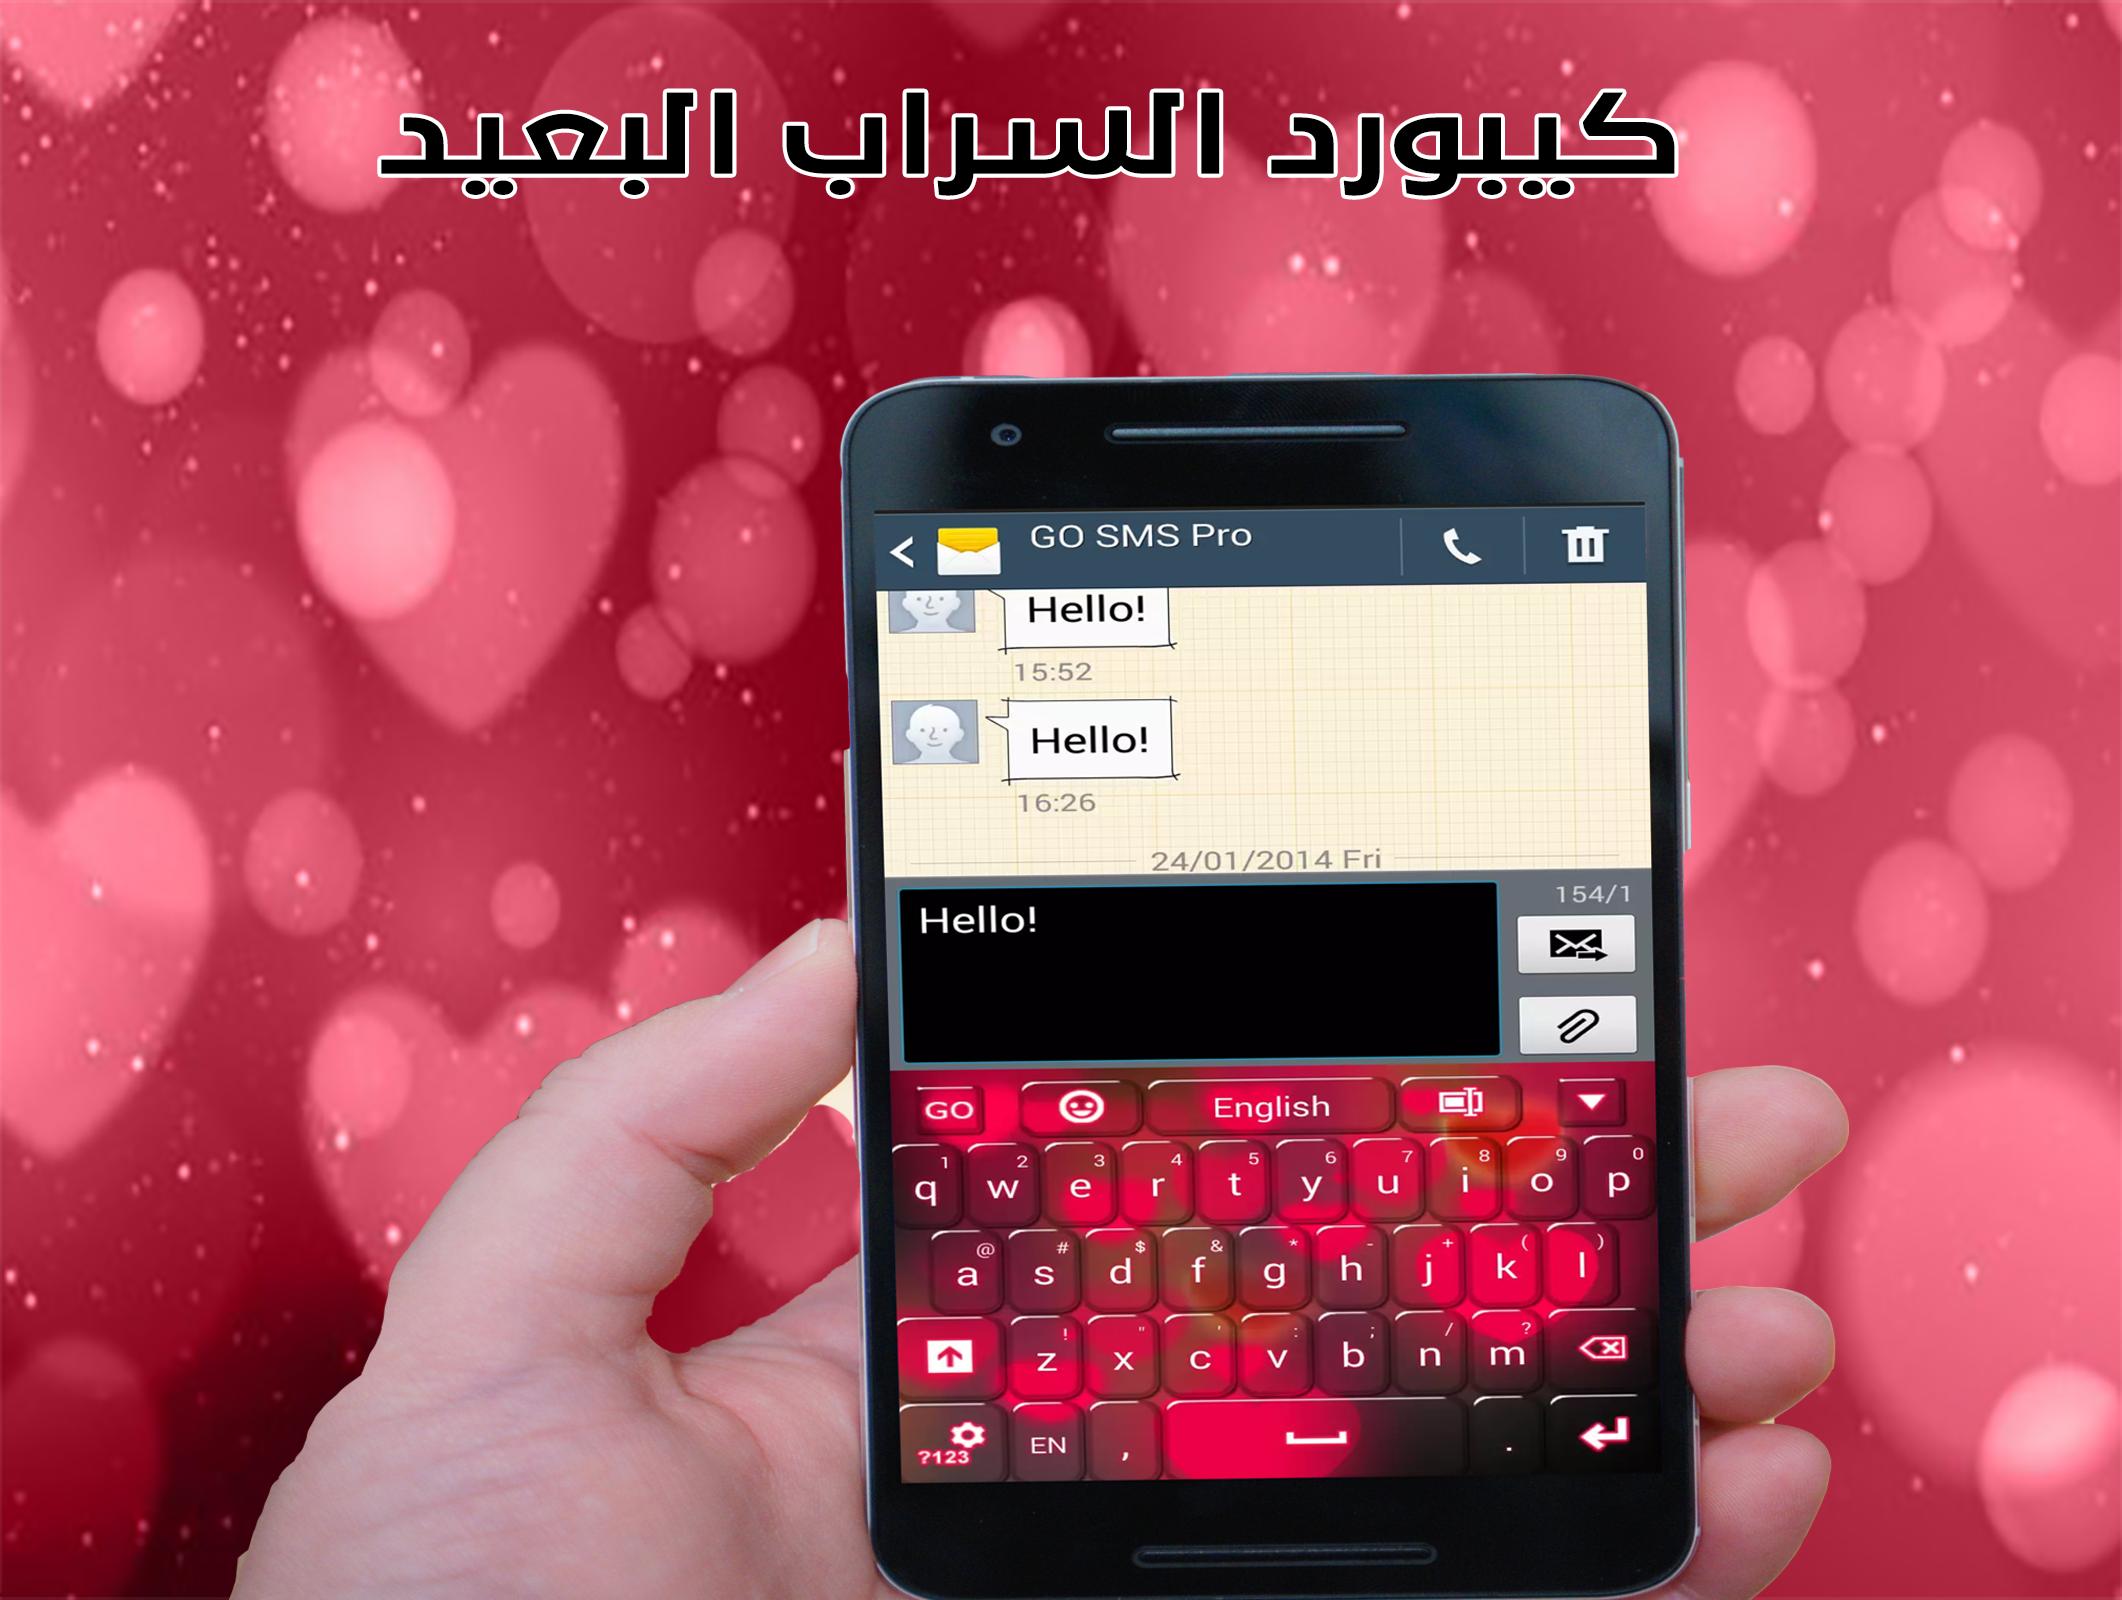 APK كيبورد السراب البعيد عربي untuk Muat Turun Android